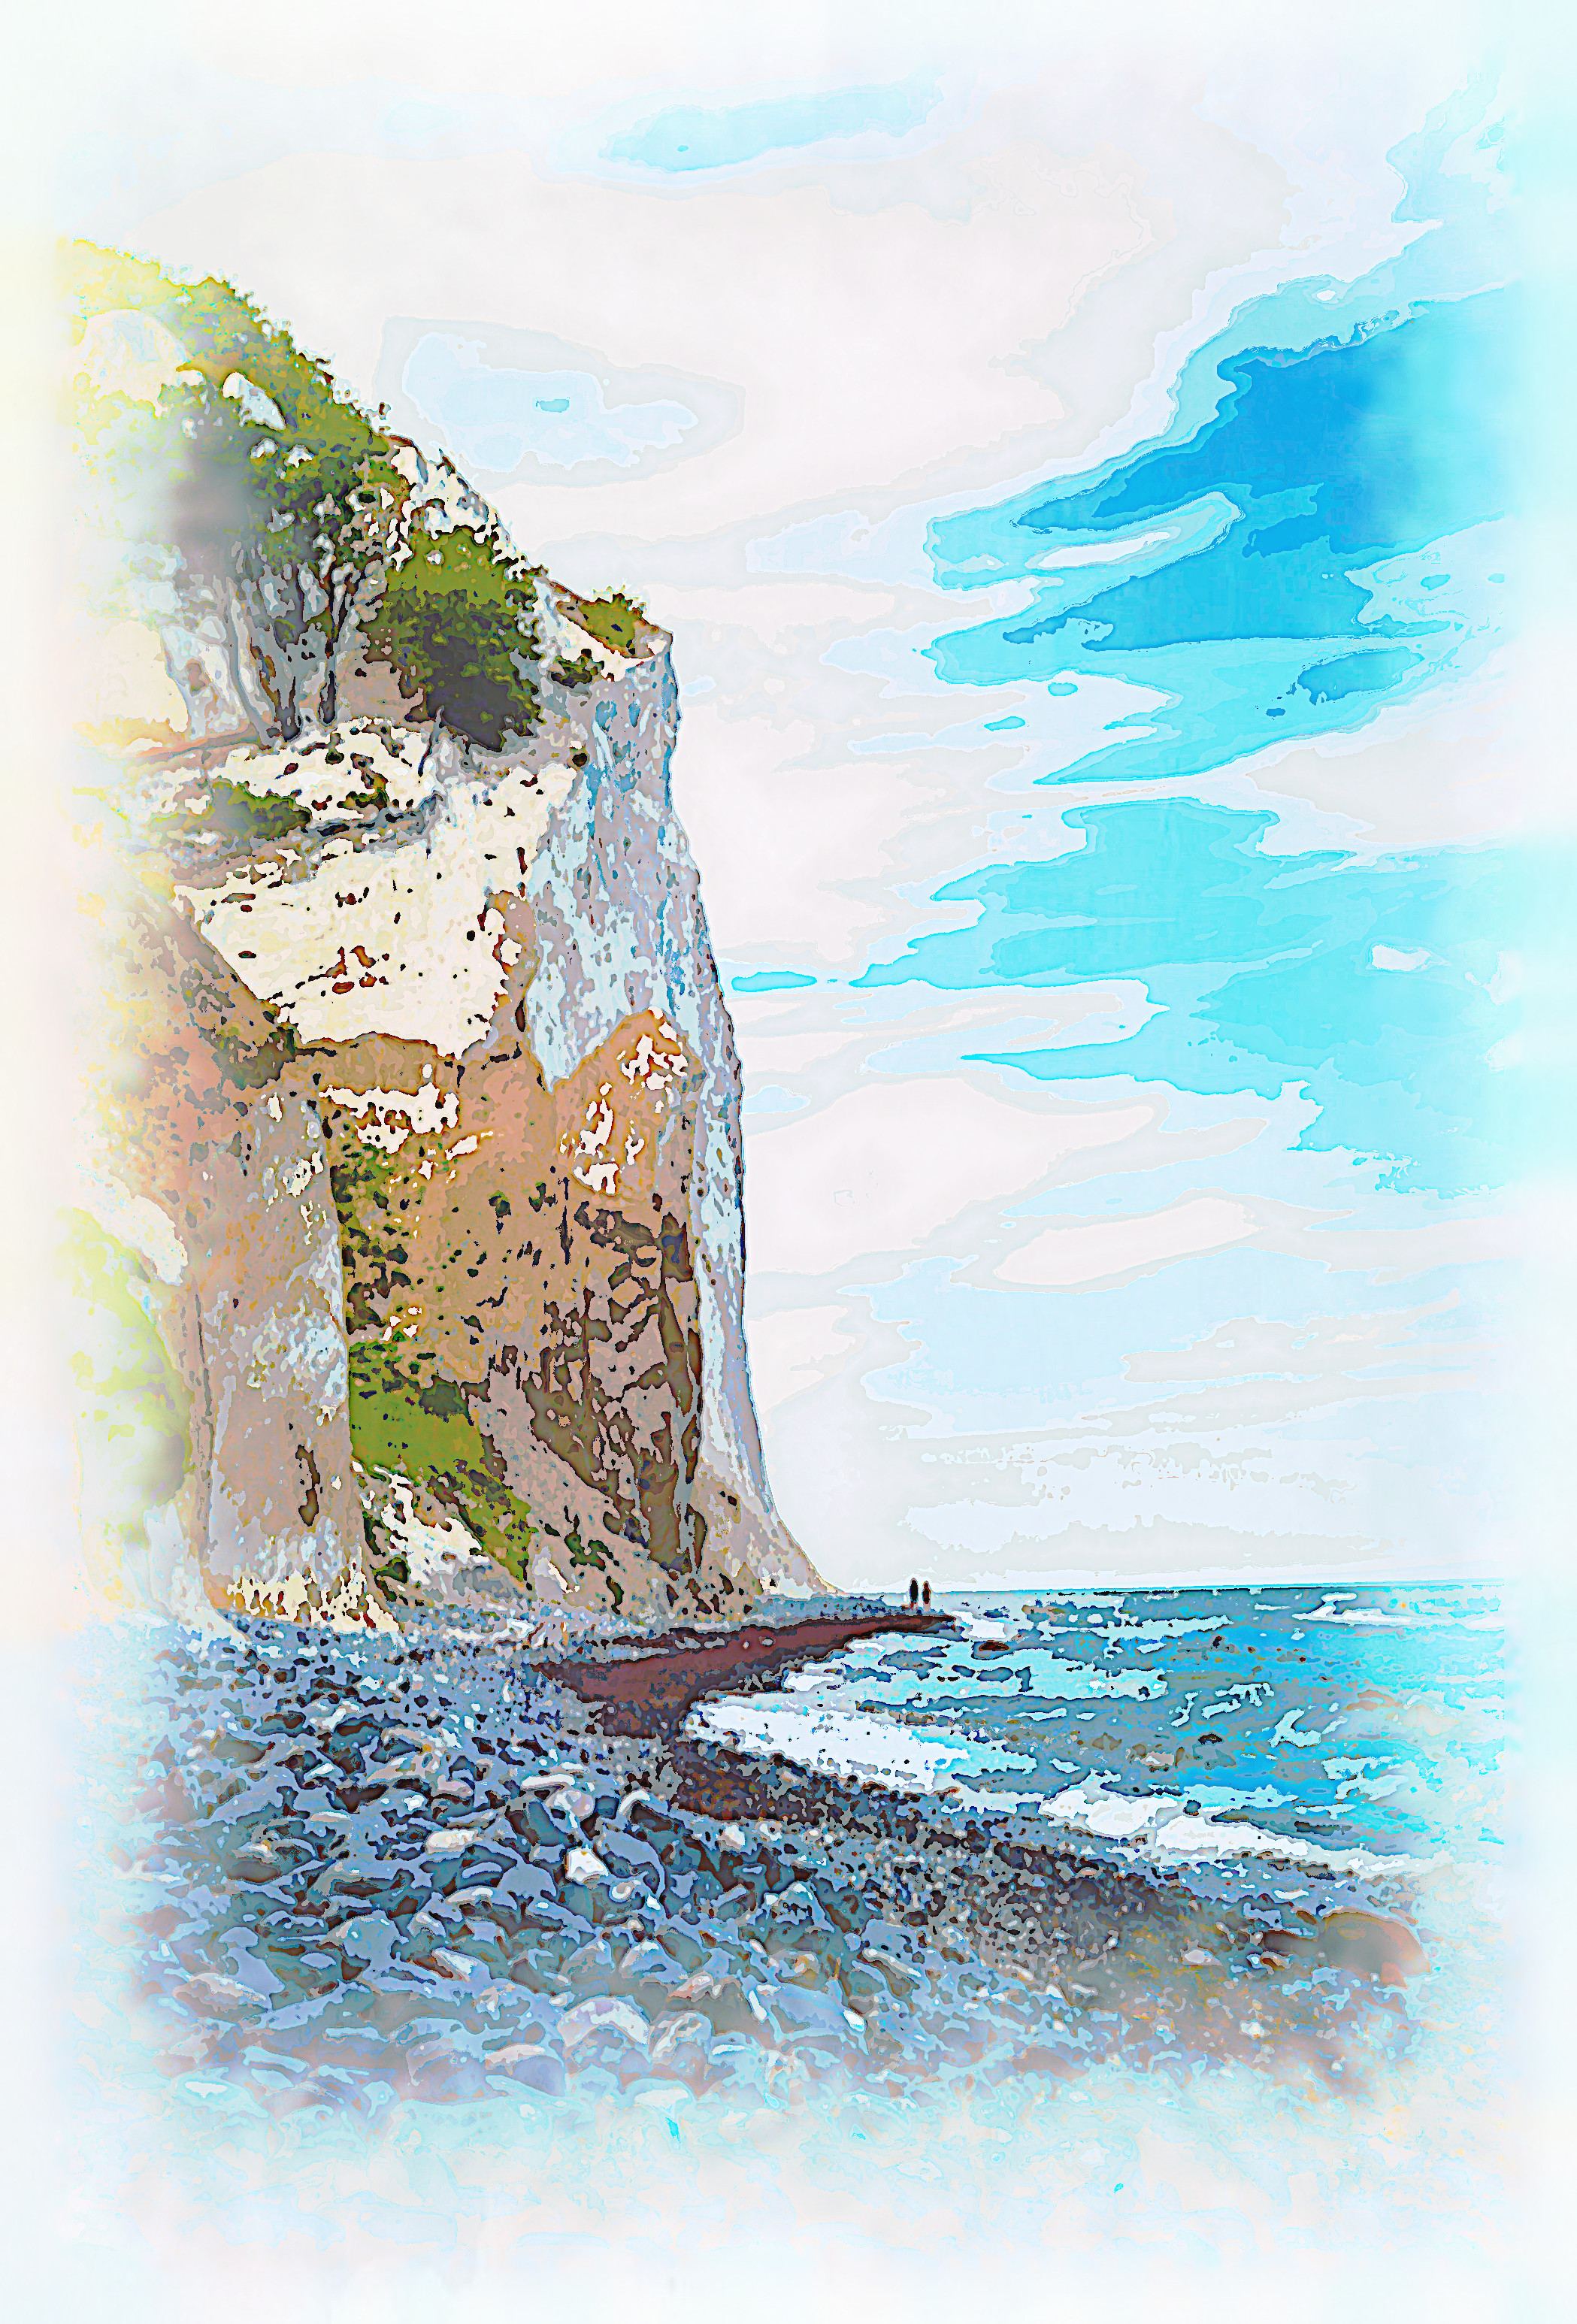 2020-04-05 17-09-58 andreas-dress-Eyvbop4Rheg-unsplash as a digital aquarel, using18 colours, source seascape, look colour contrast plus.jpg